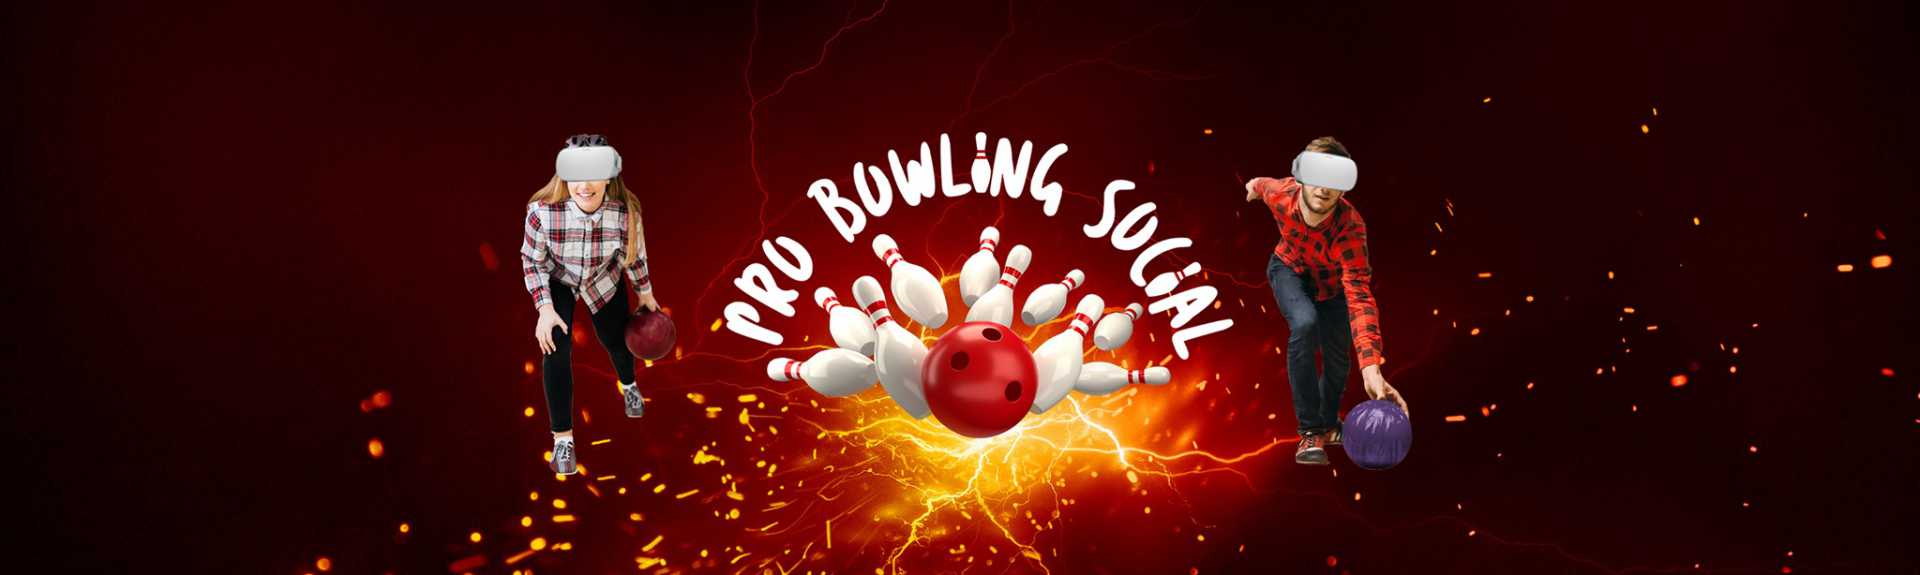 Pro Bowling Social